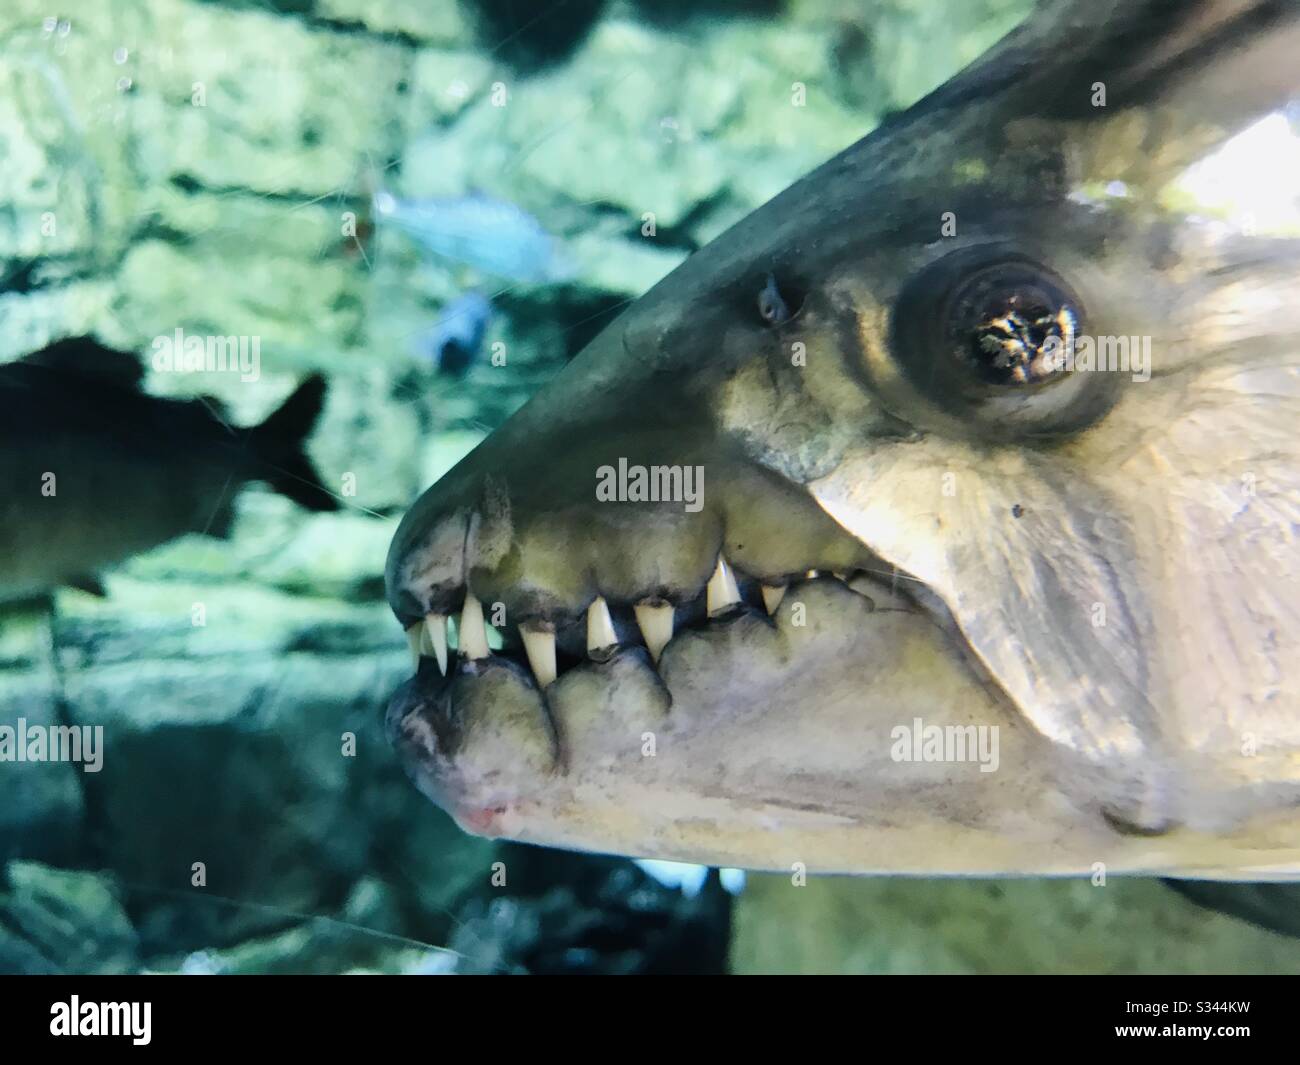 Piranhas of Africa -Tiger fish jaw teeth-piranha showing its ferocious teeth thru glass in a aquarium in Singapore river safari- close up image of fish head-carnivore Piraña fish -freshwater predator Stock Photo